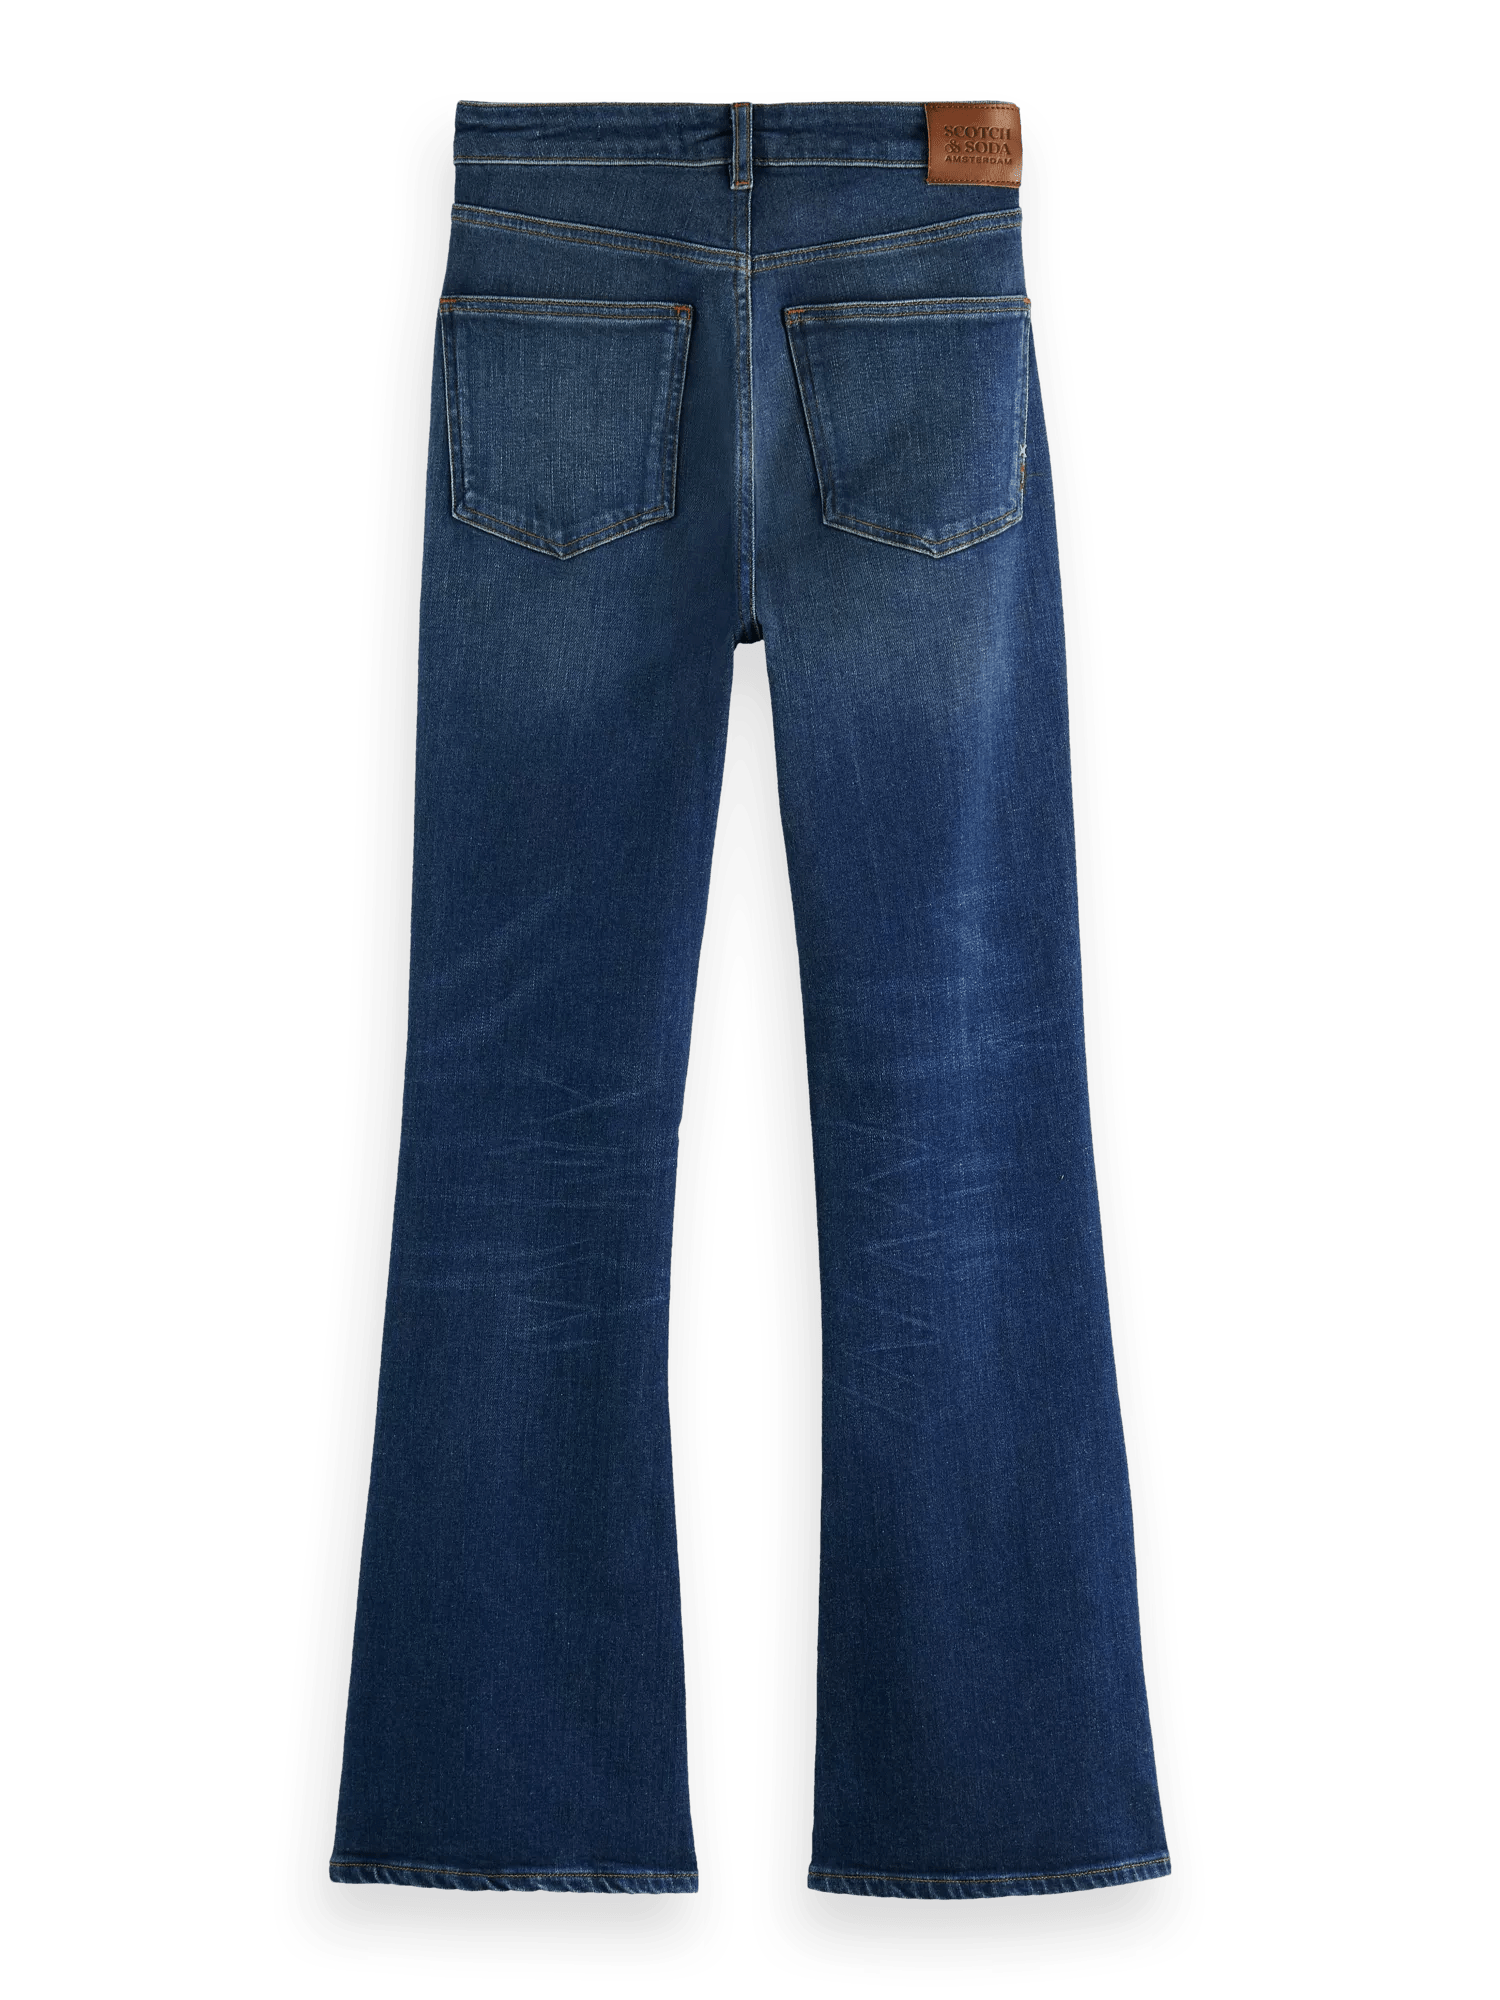 Scotch & Soda The Charm flared organic cotton jeans BCK